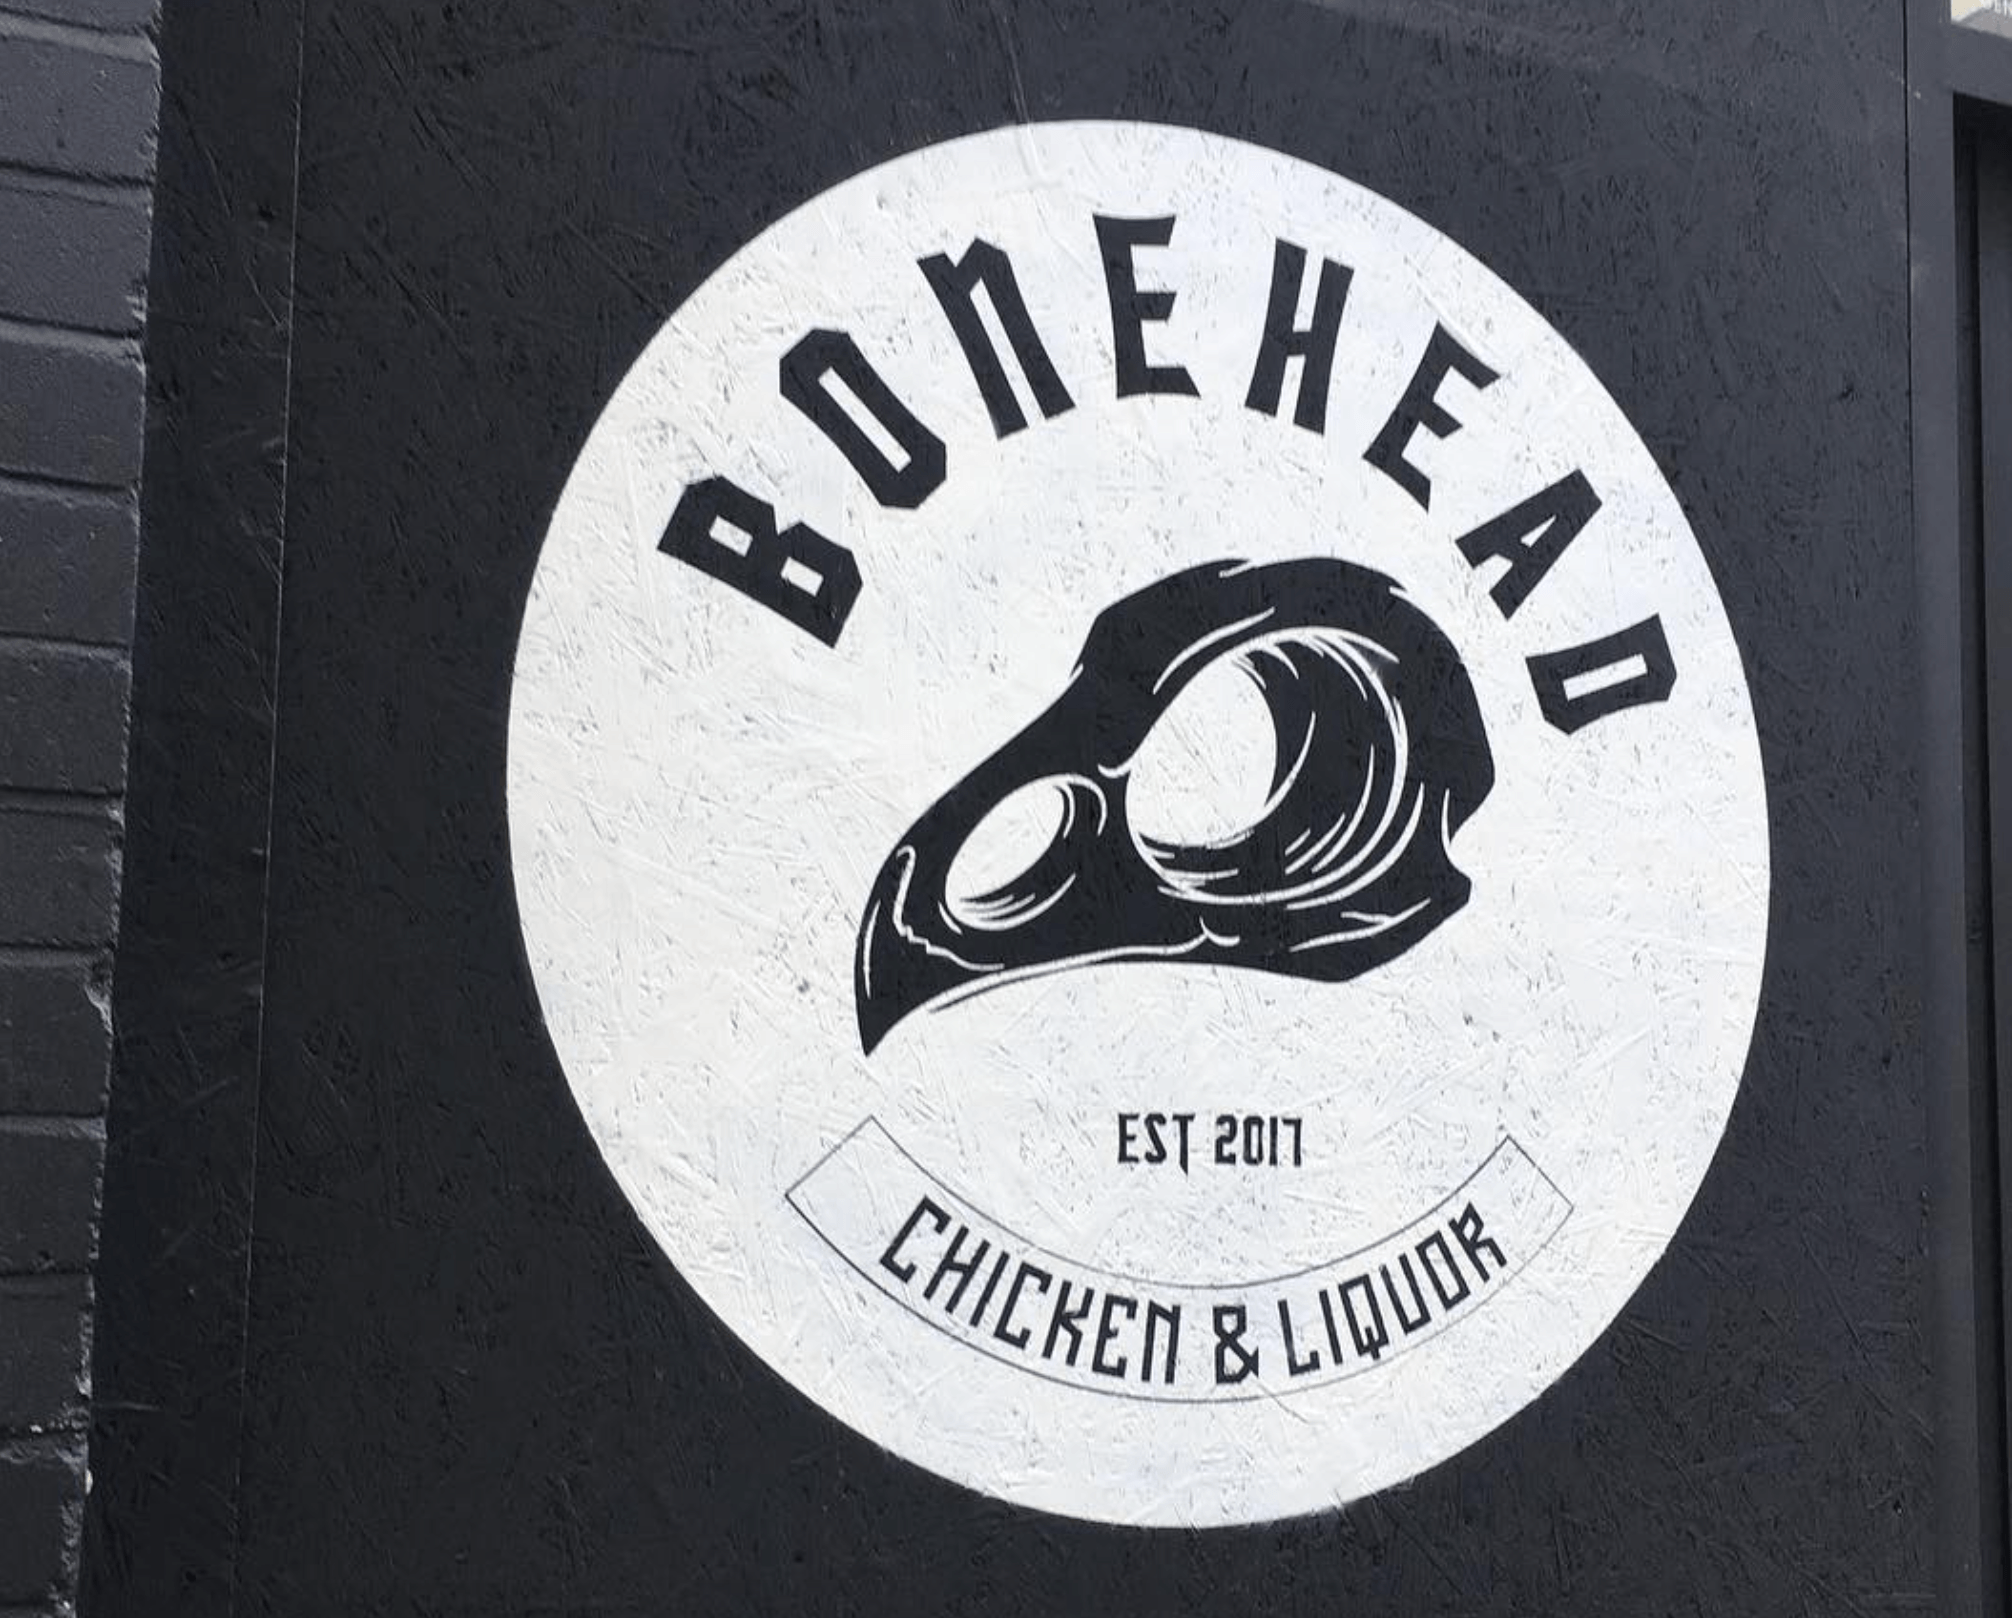 Bonehead Chicken – Magnificent Takeout, City Centre